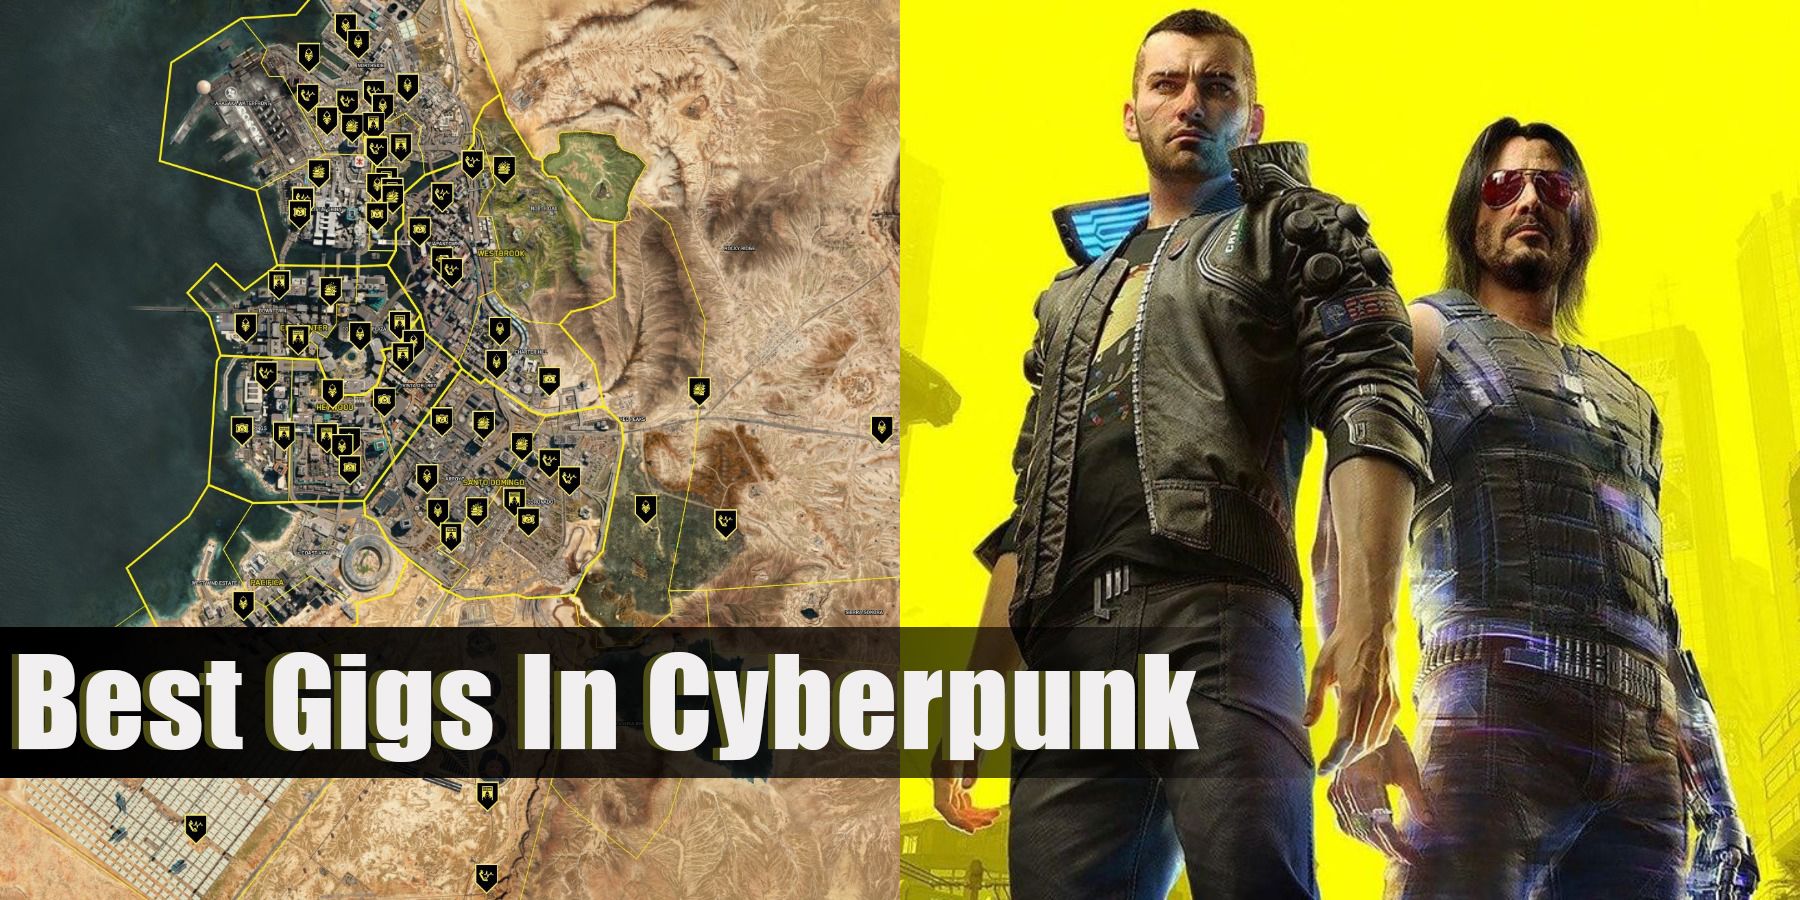 V, Jhonny and Cyberpunk's map